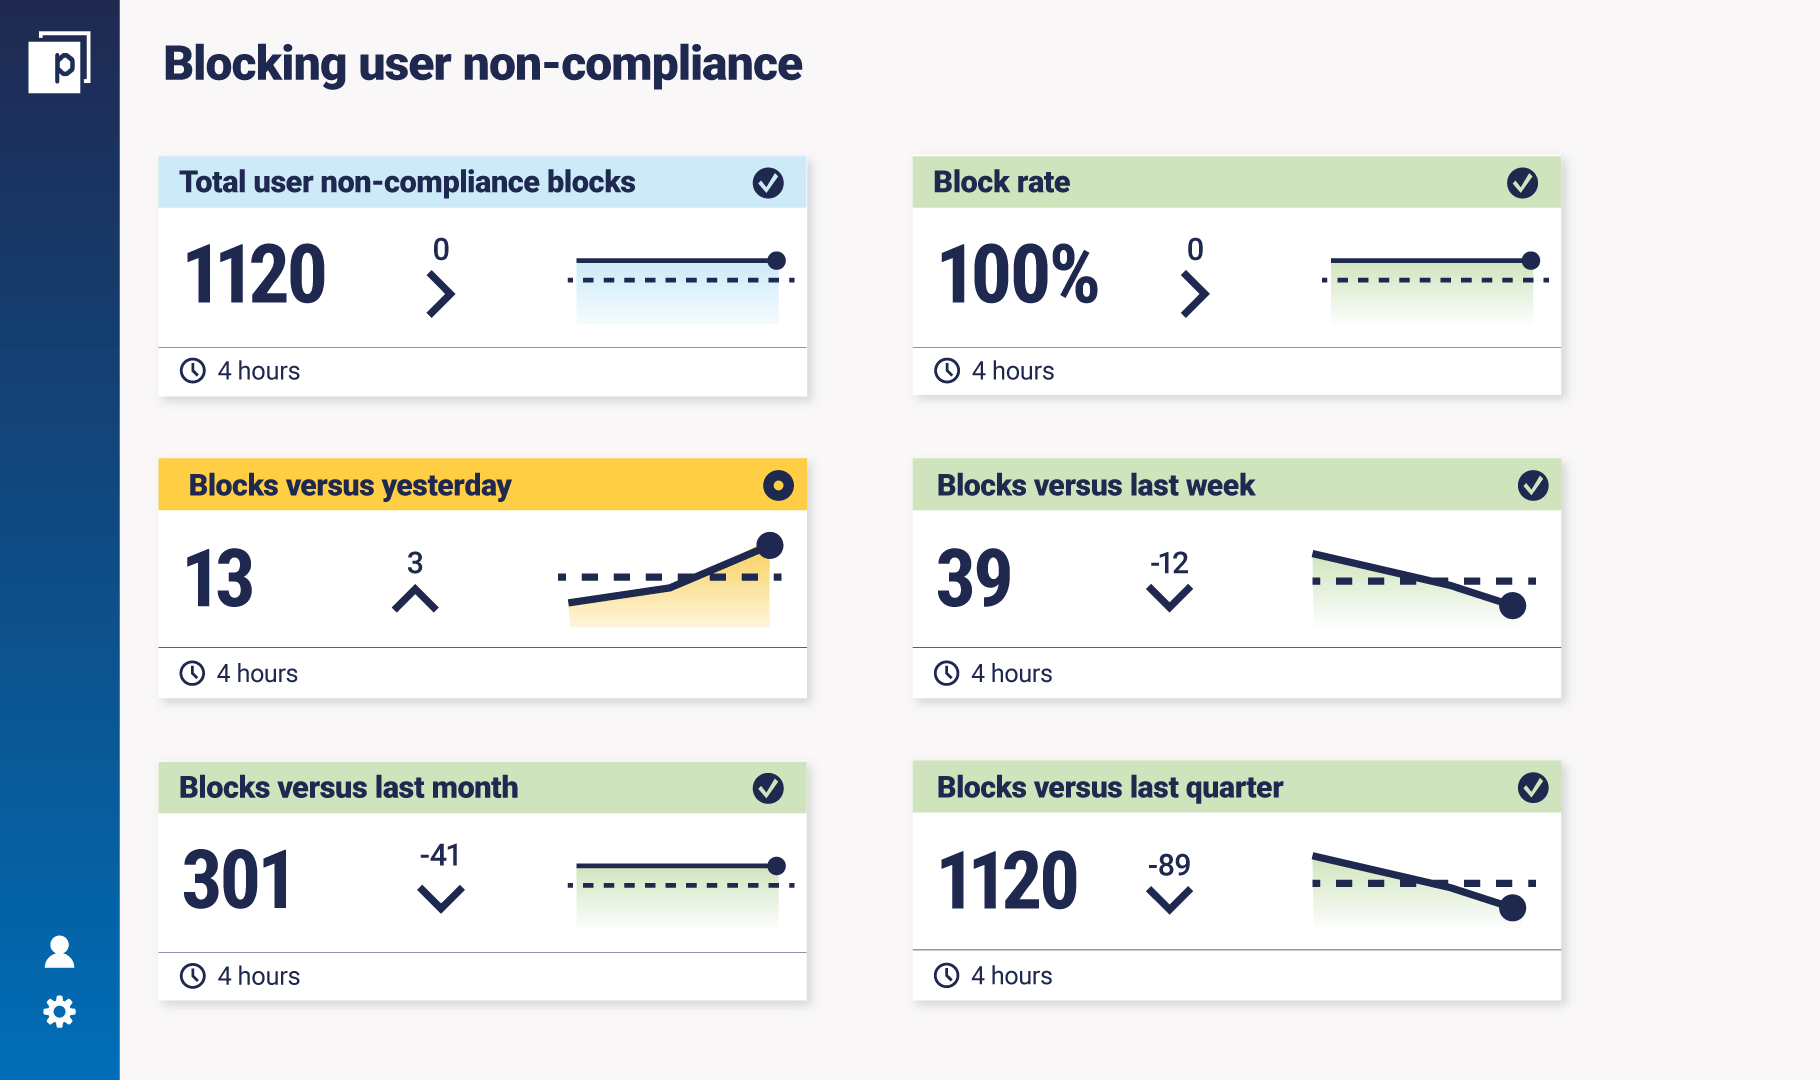 Blocking user non-compliance dashboard